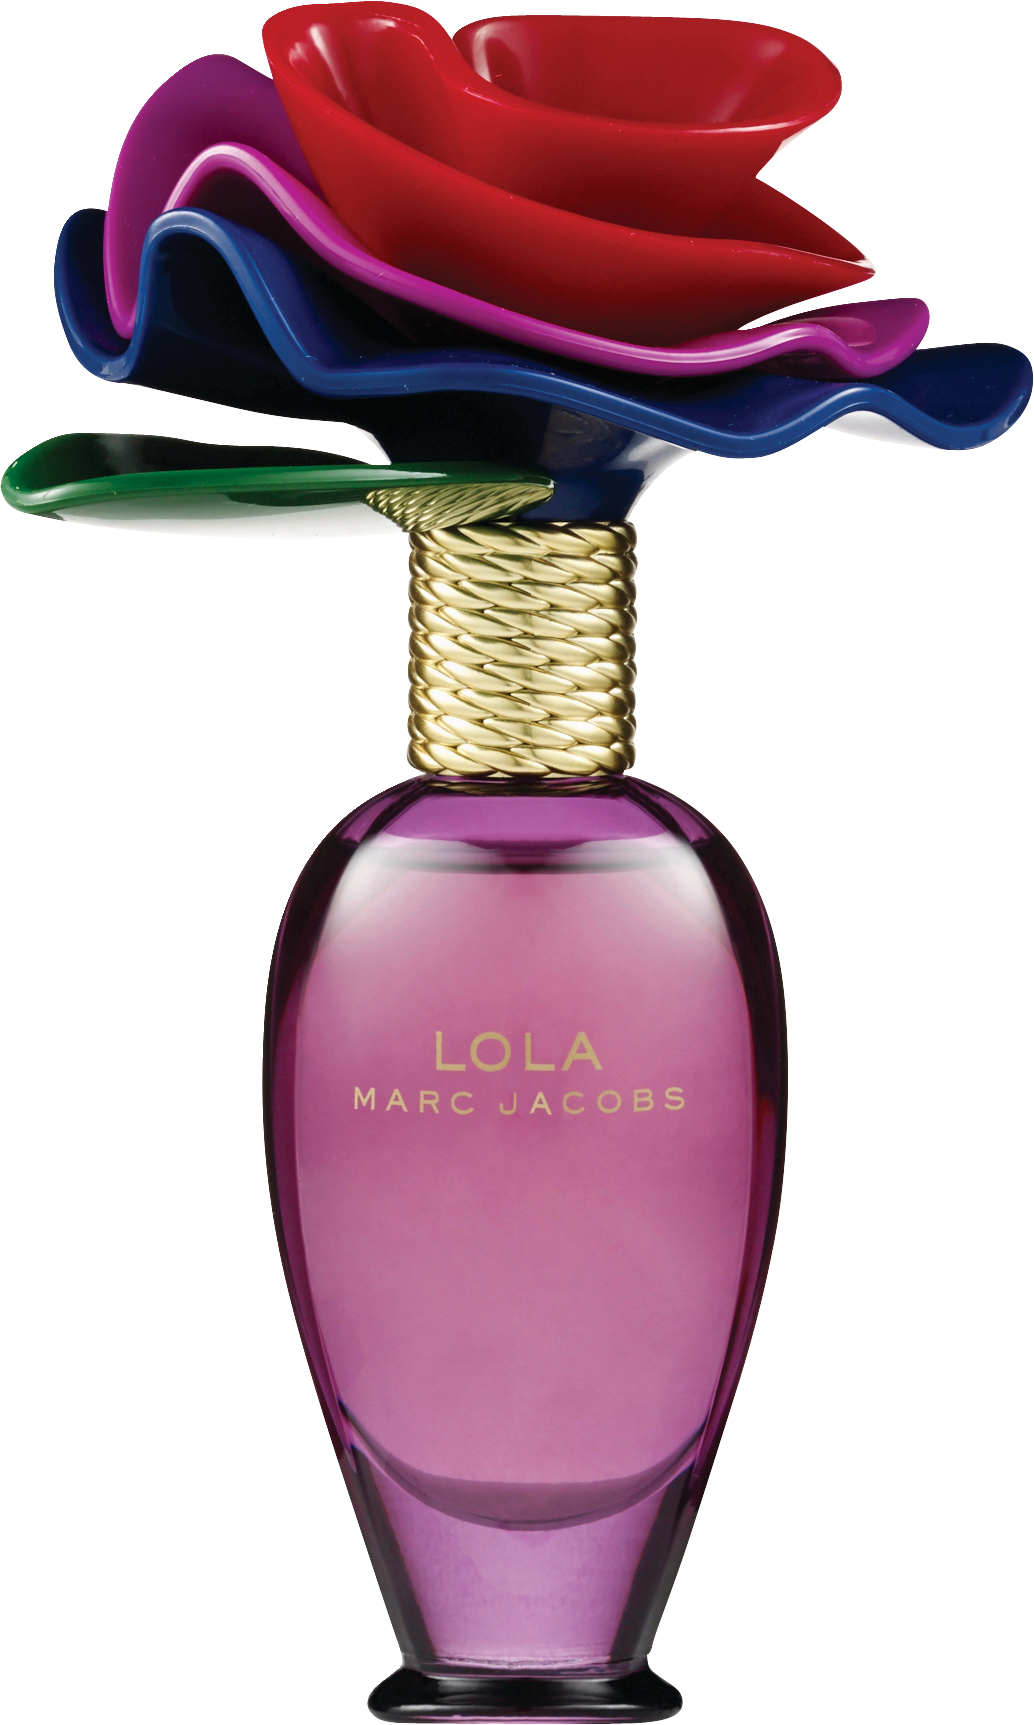 Lola by Marc Jacobs - Eau de Parfum en spray, 1.7 oz